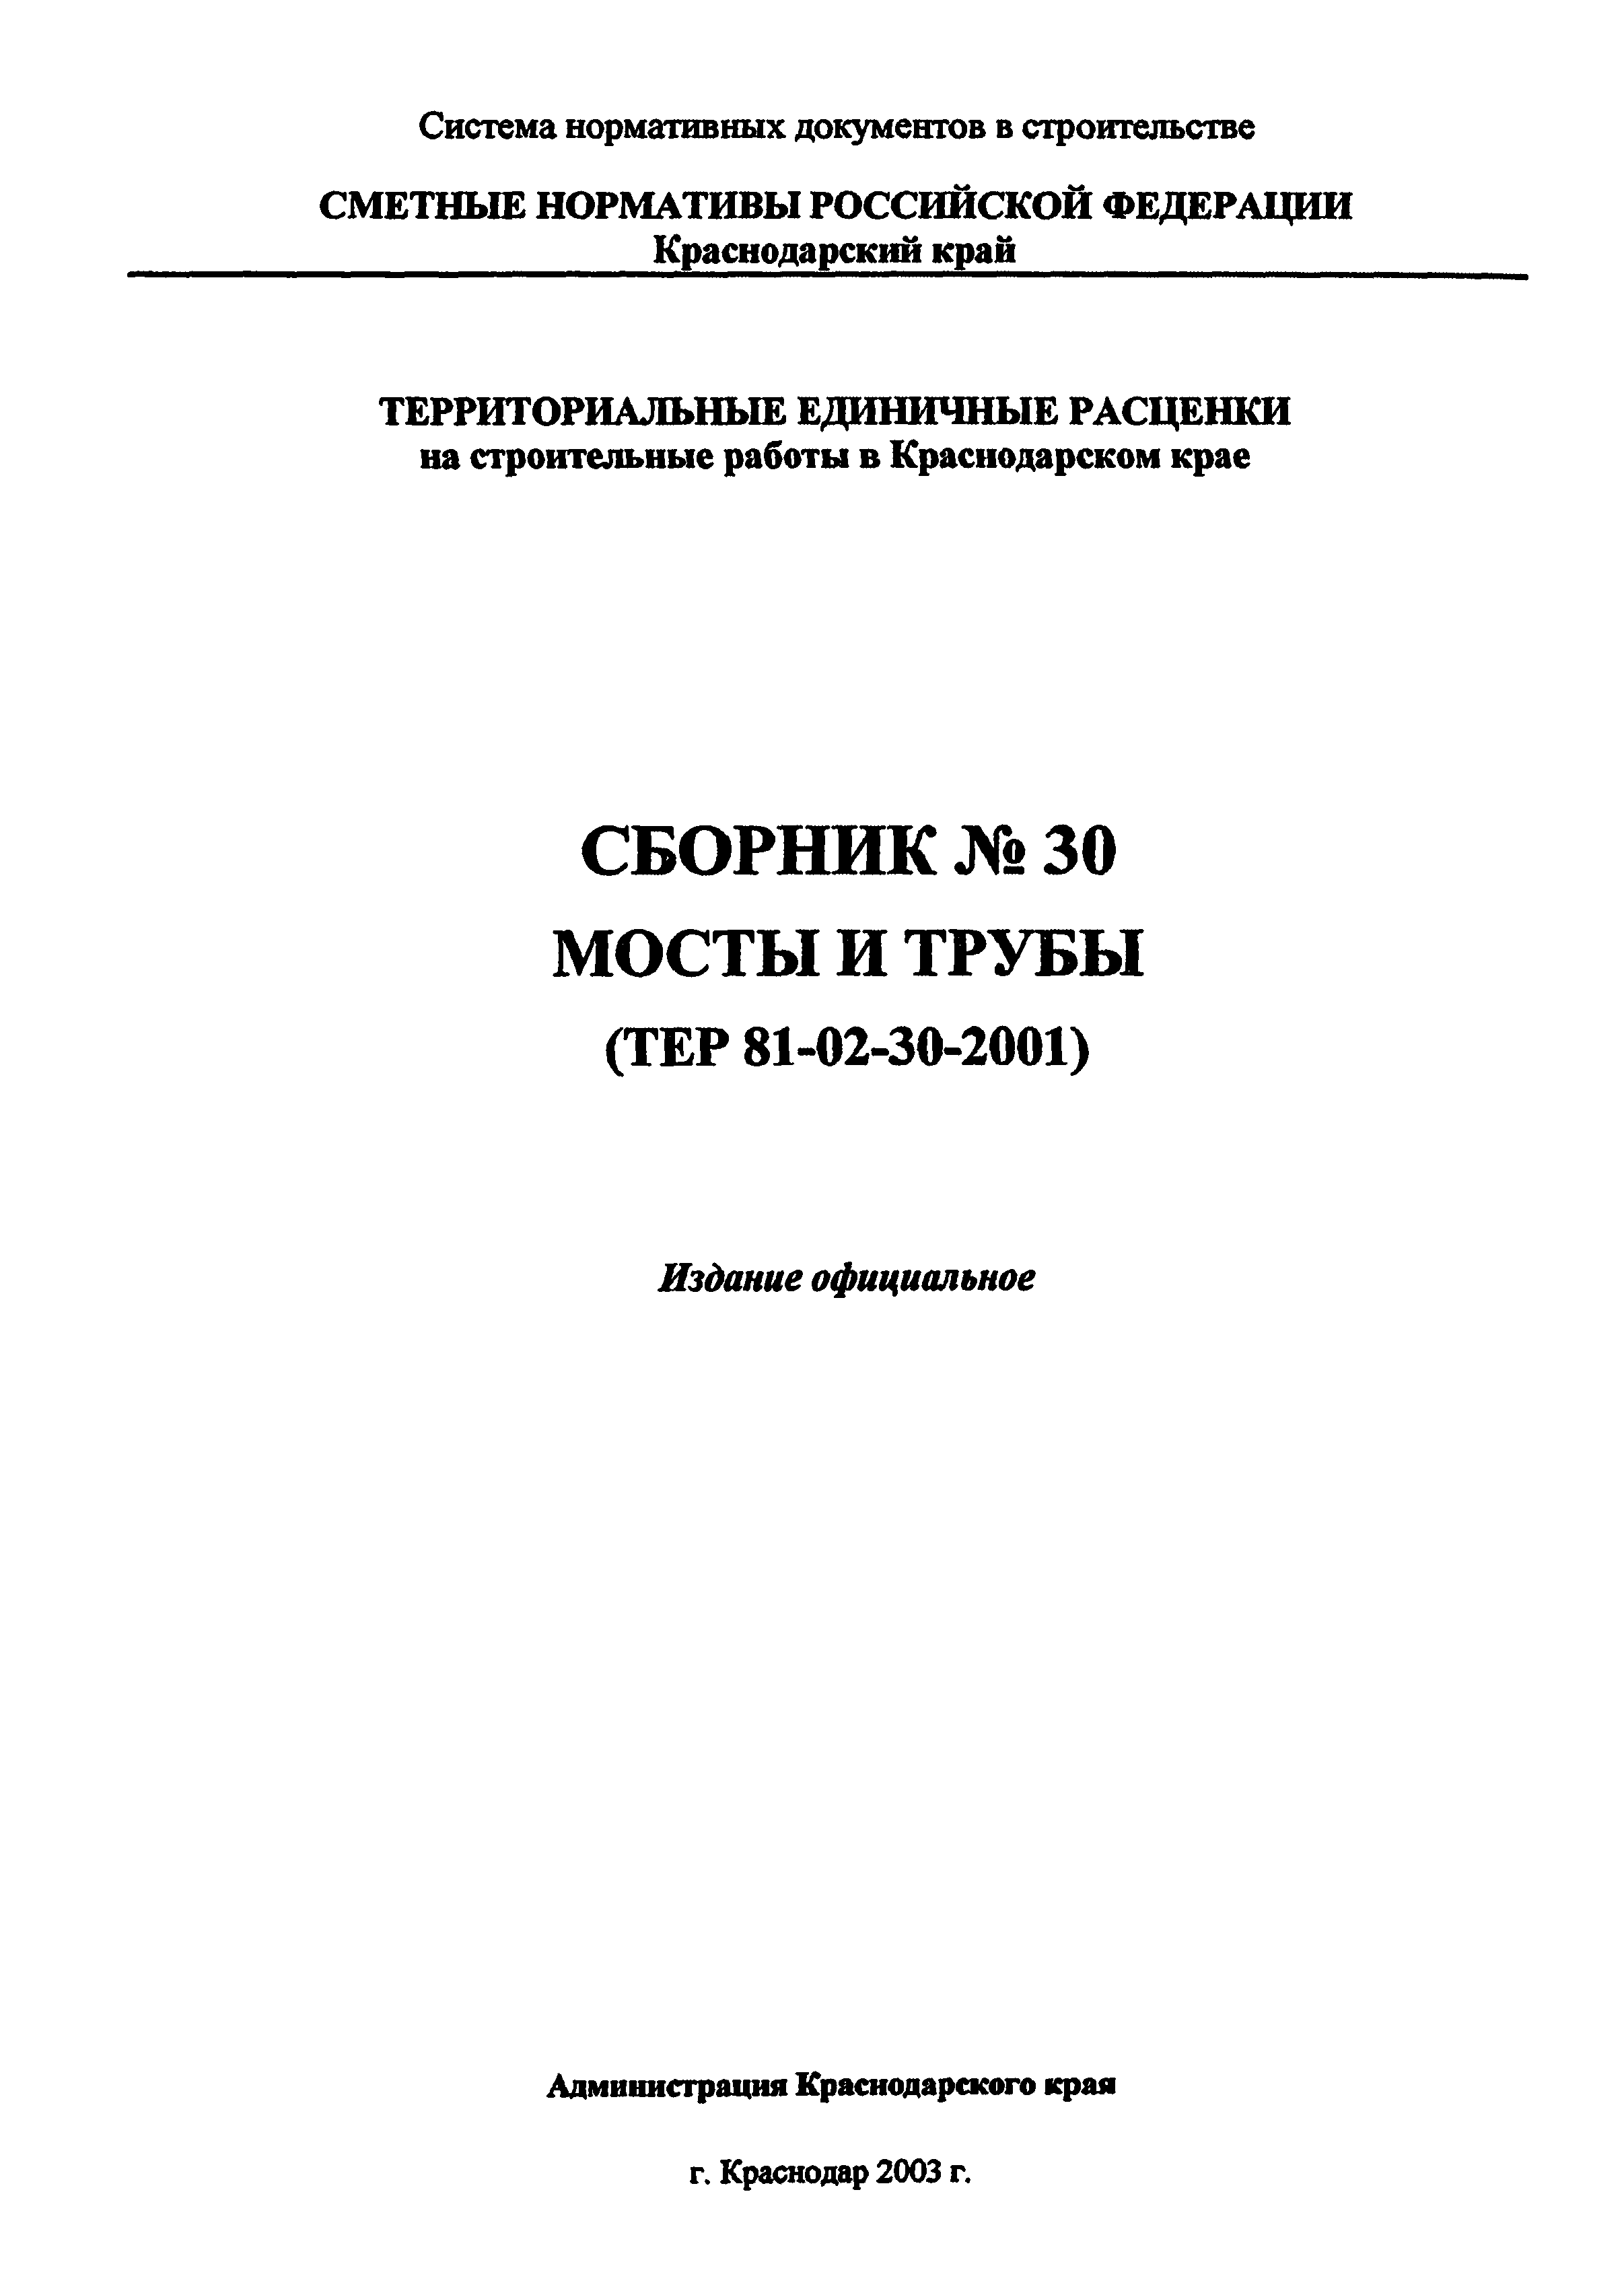 ТЕР Краснодарского края 2001-30